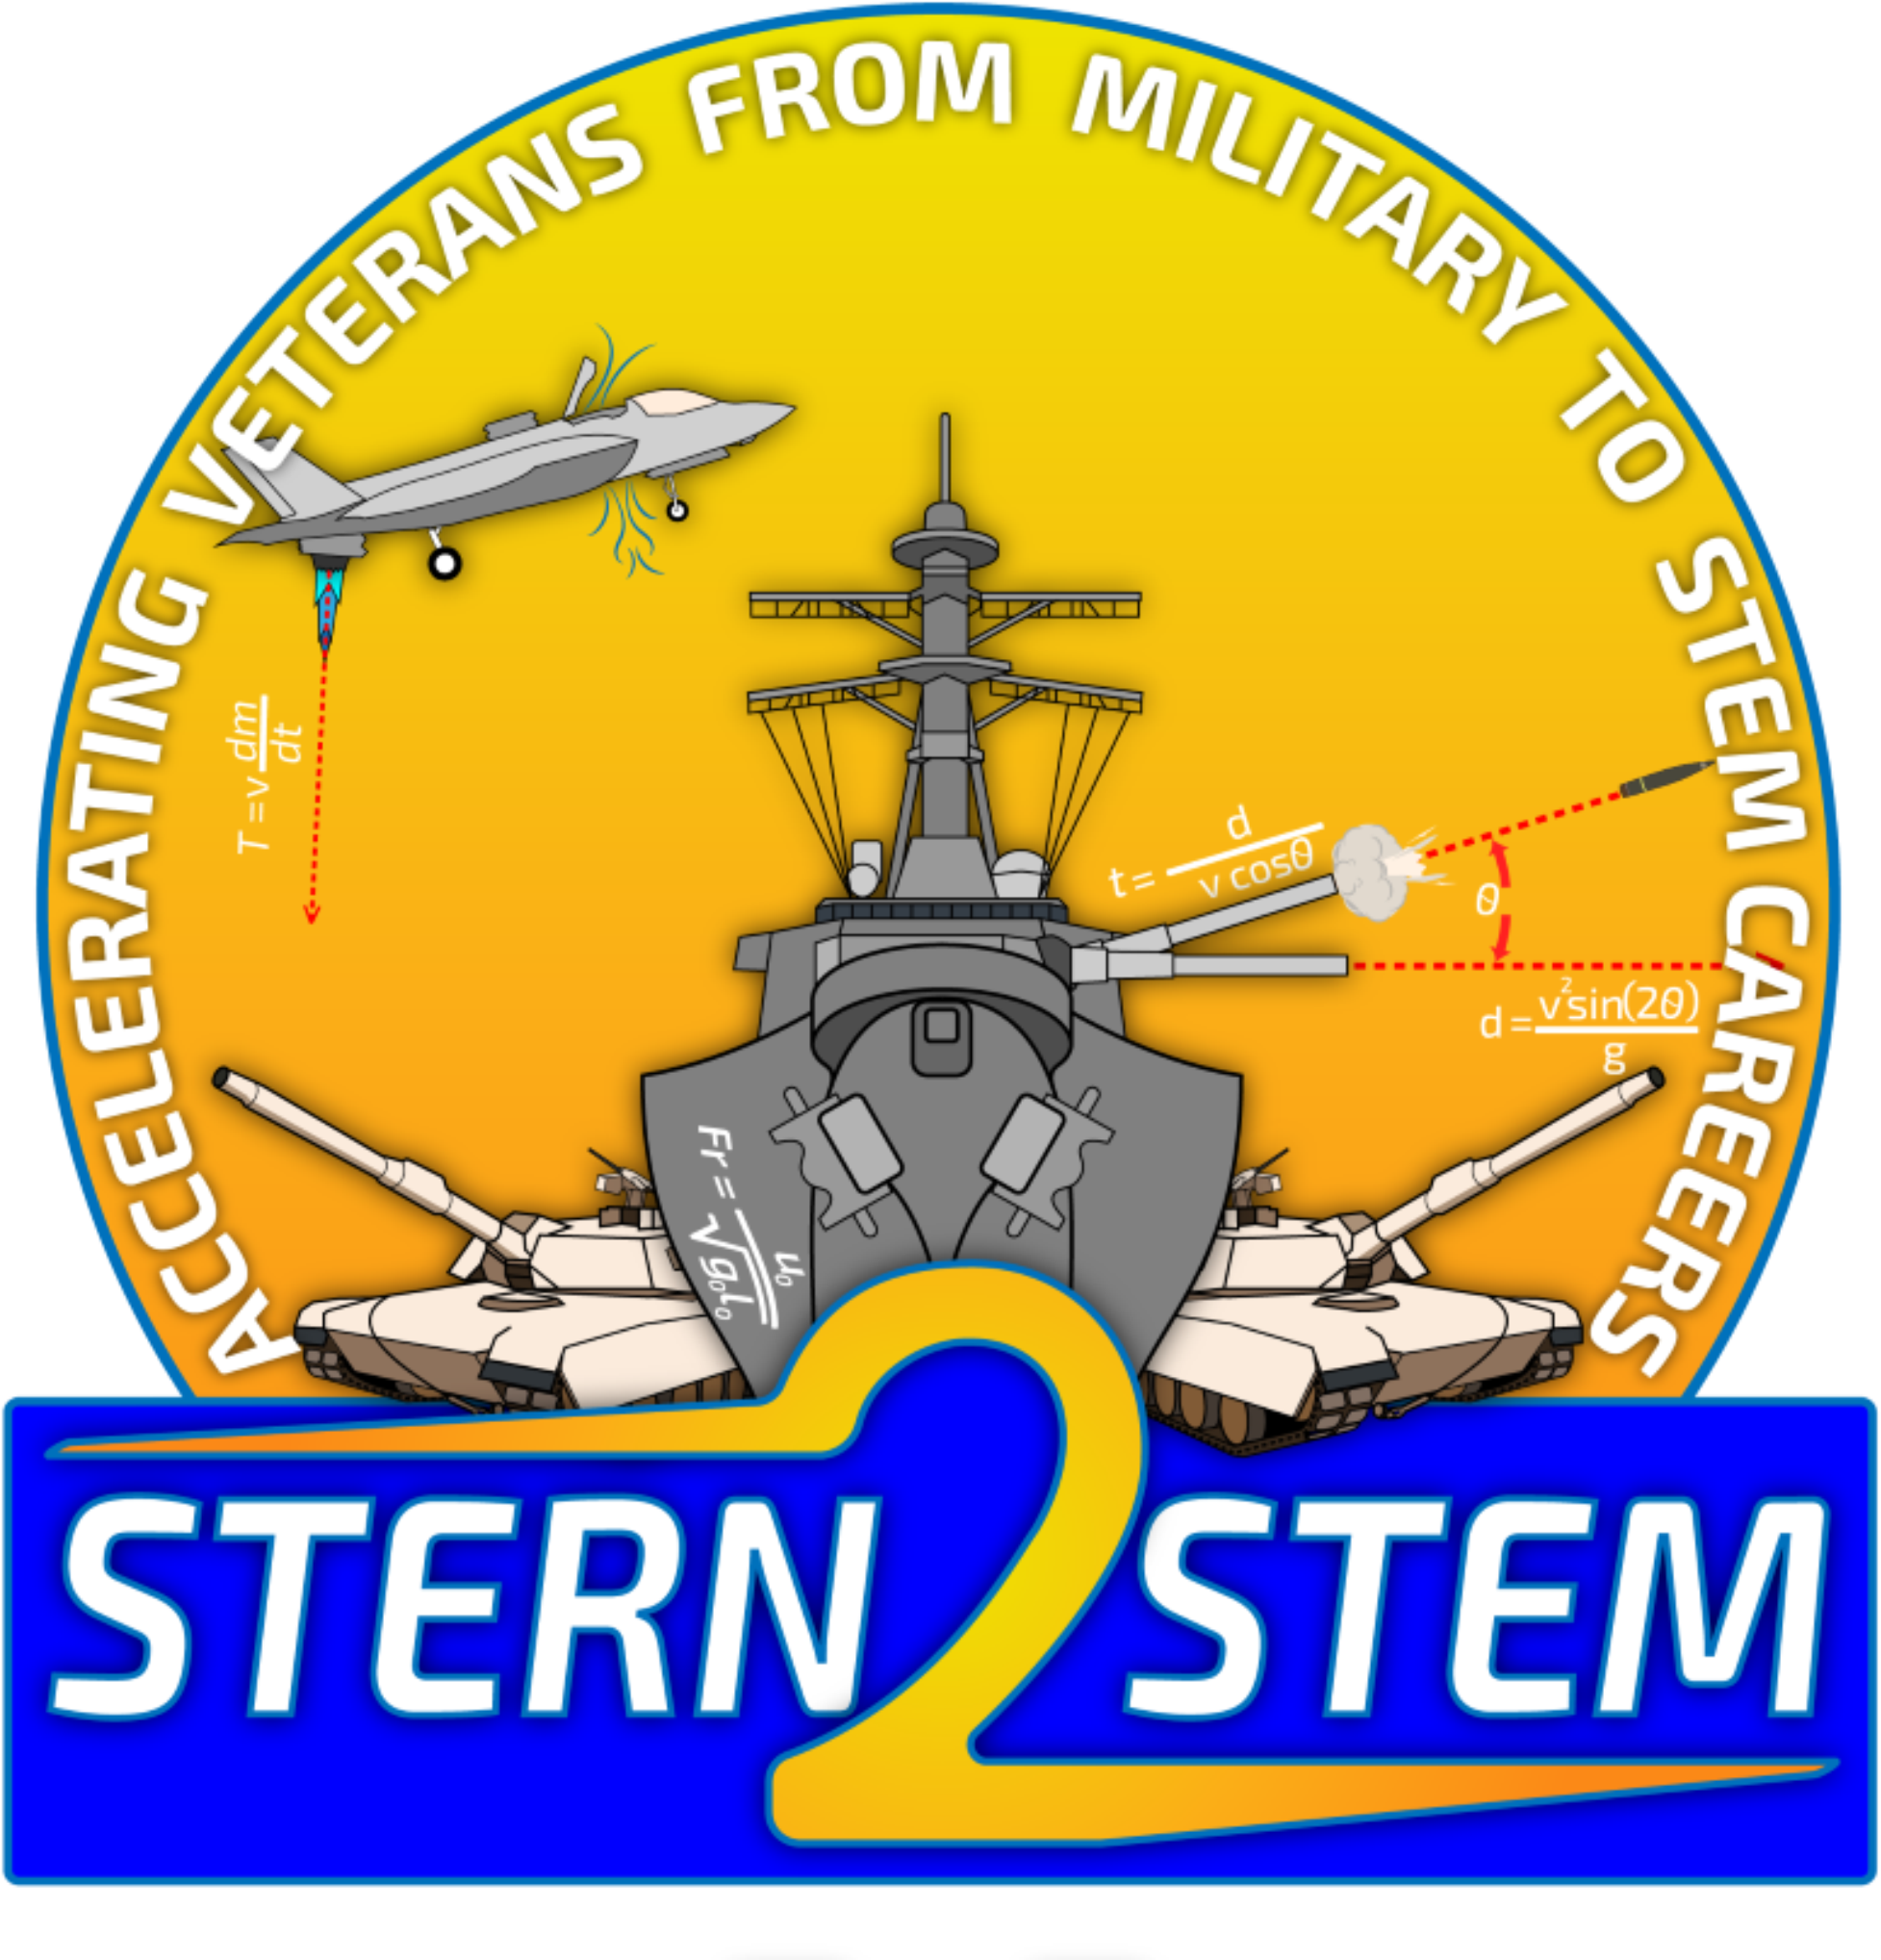 Stern2stemlogo - Military Aircraft (2041x2042)